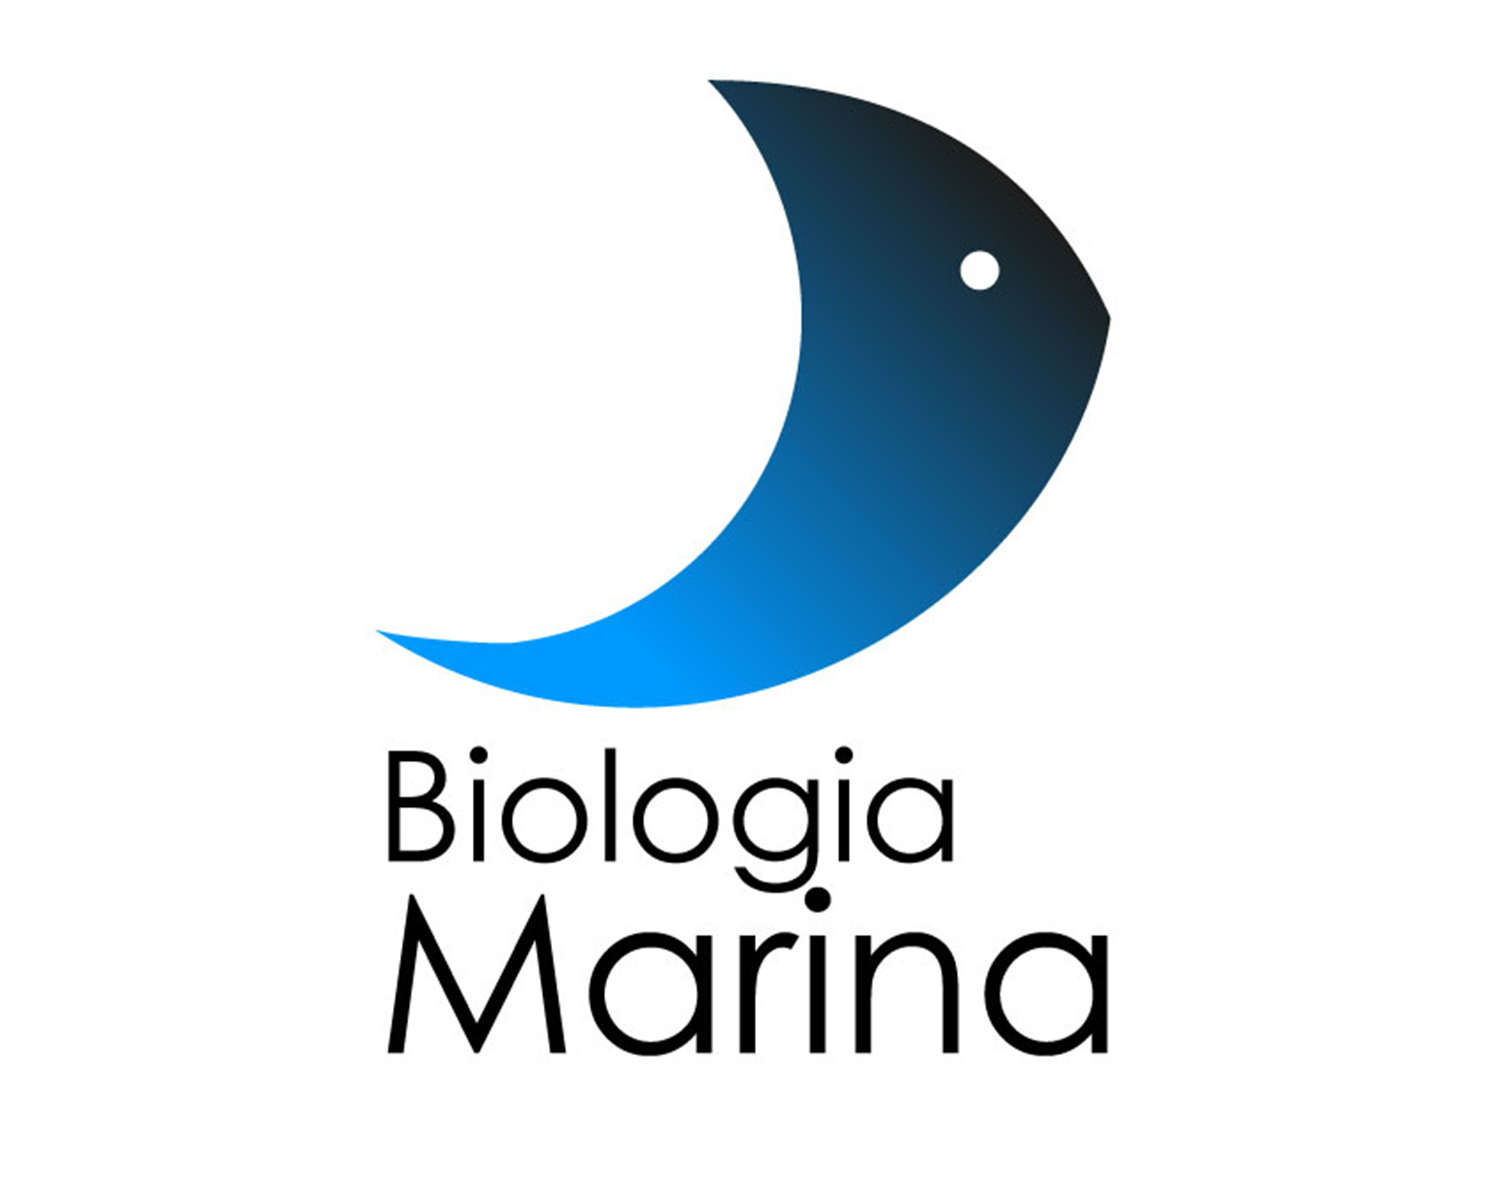 Biologia Marina logo